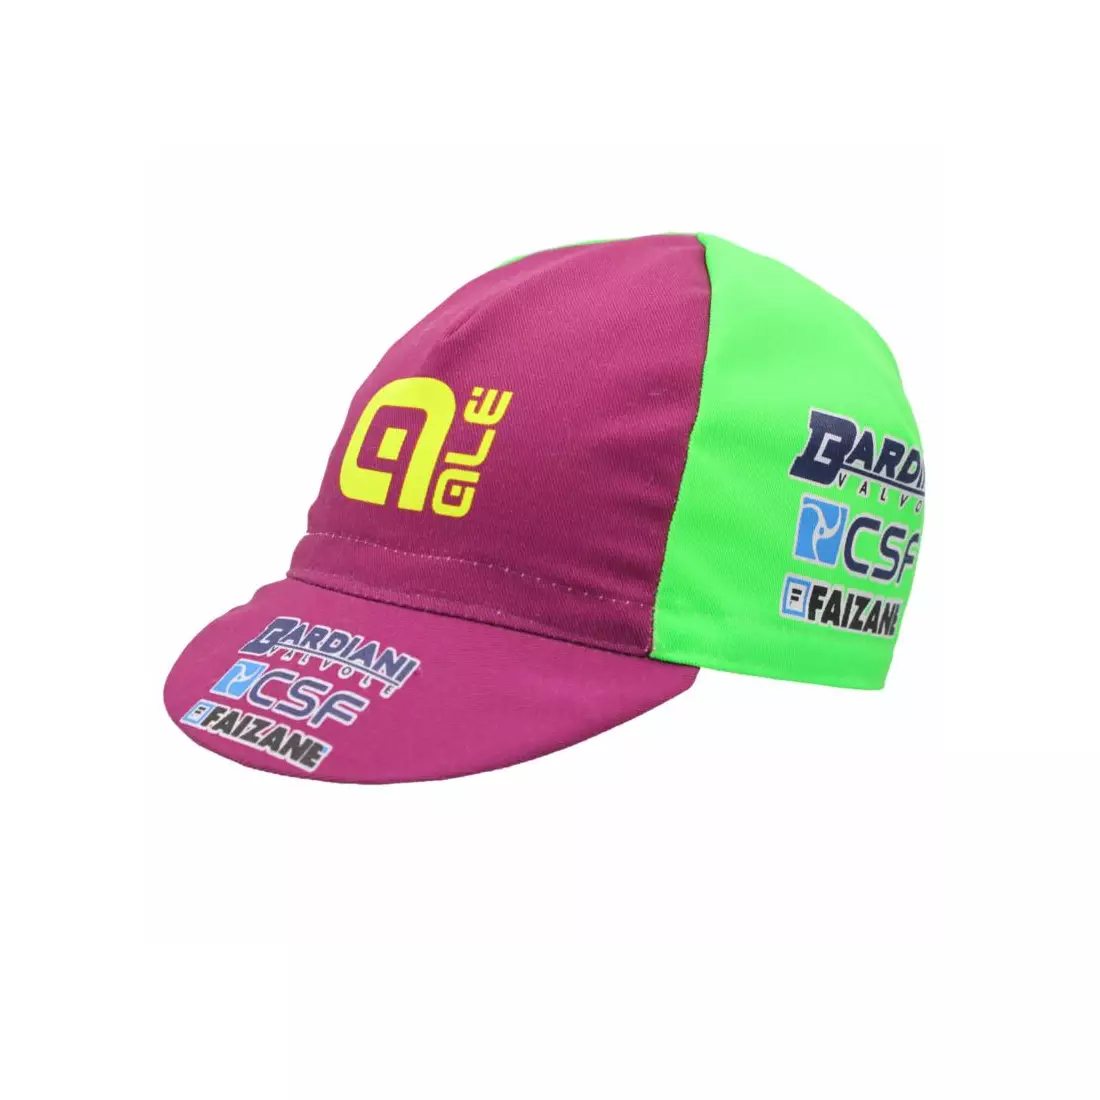 APIS PROFI CSF BARDIANI cycling cap with visor